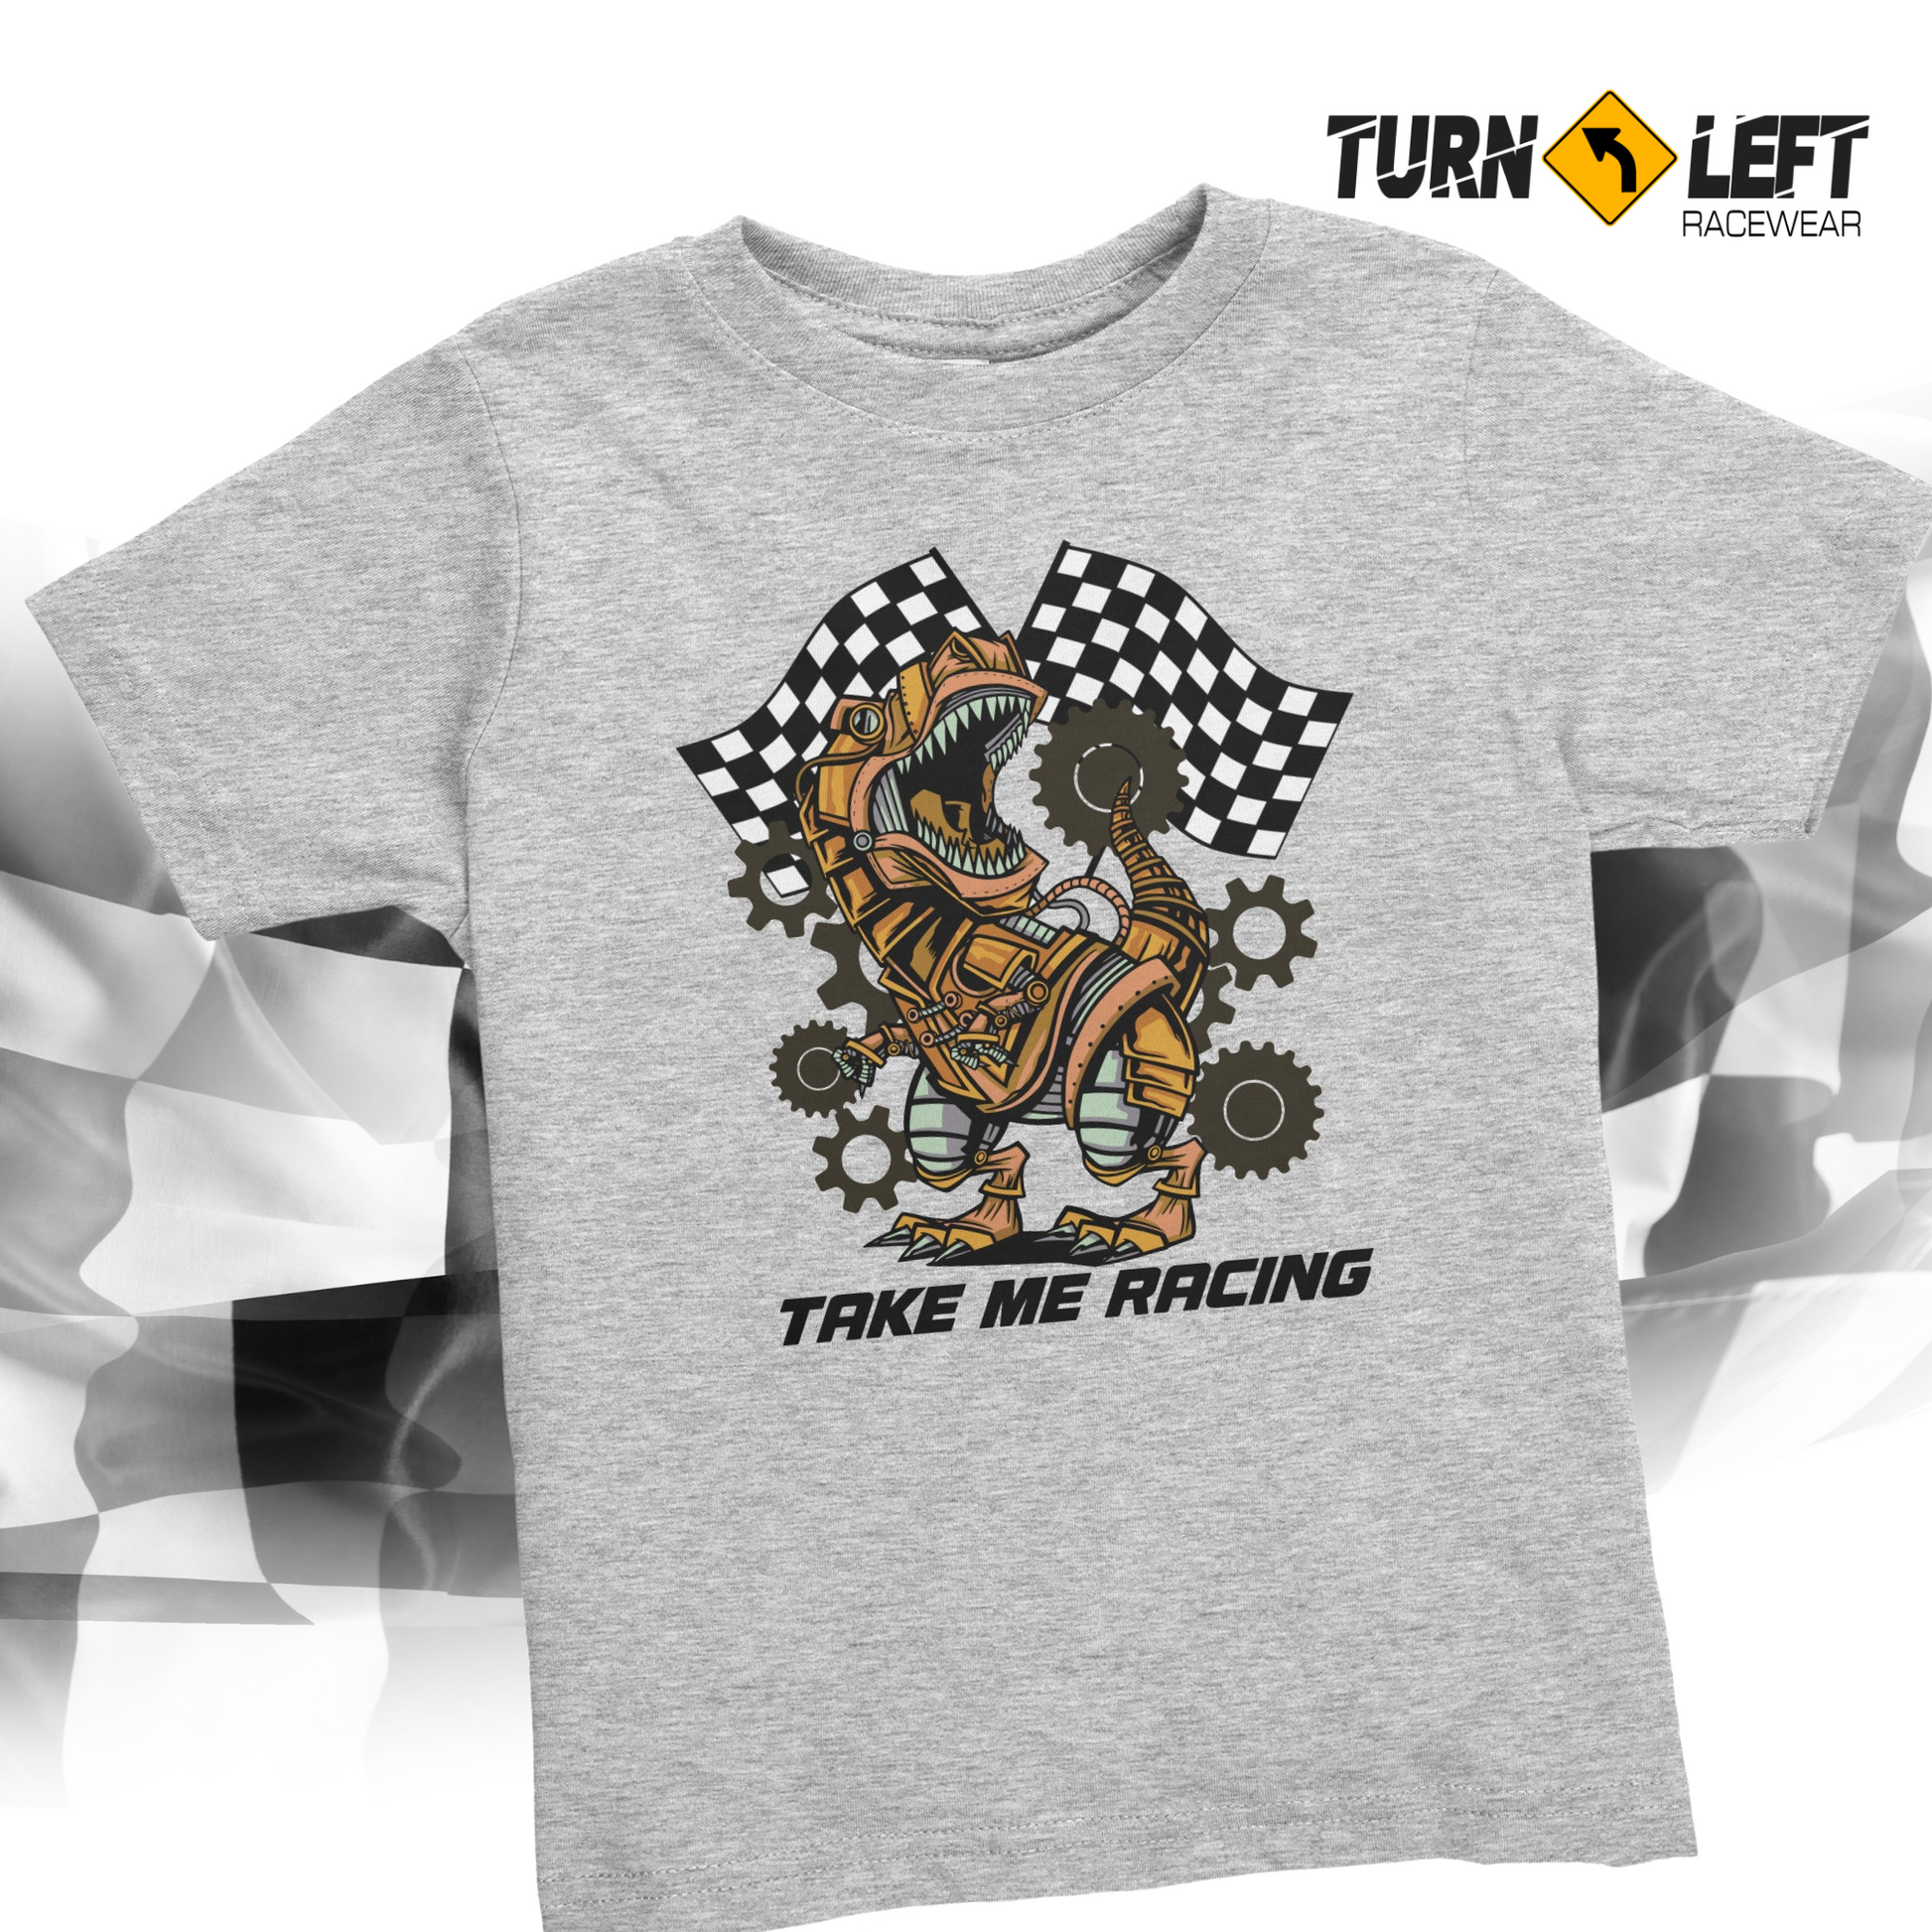 Kids Racing Shirts T-Rex Dinosaur Racing Graphic shirts for Boys and Girls. Dirt Track Racing Shirts for Toddlers. Kids Racecar flag  shirts